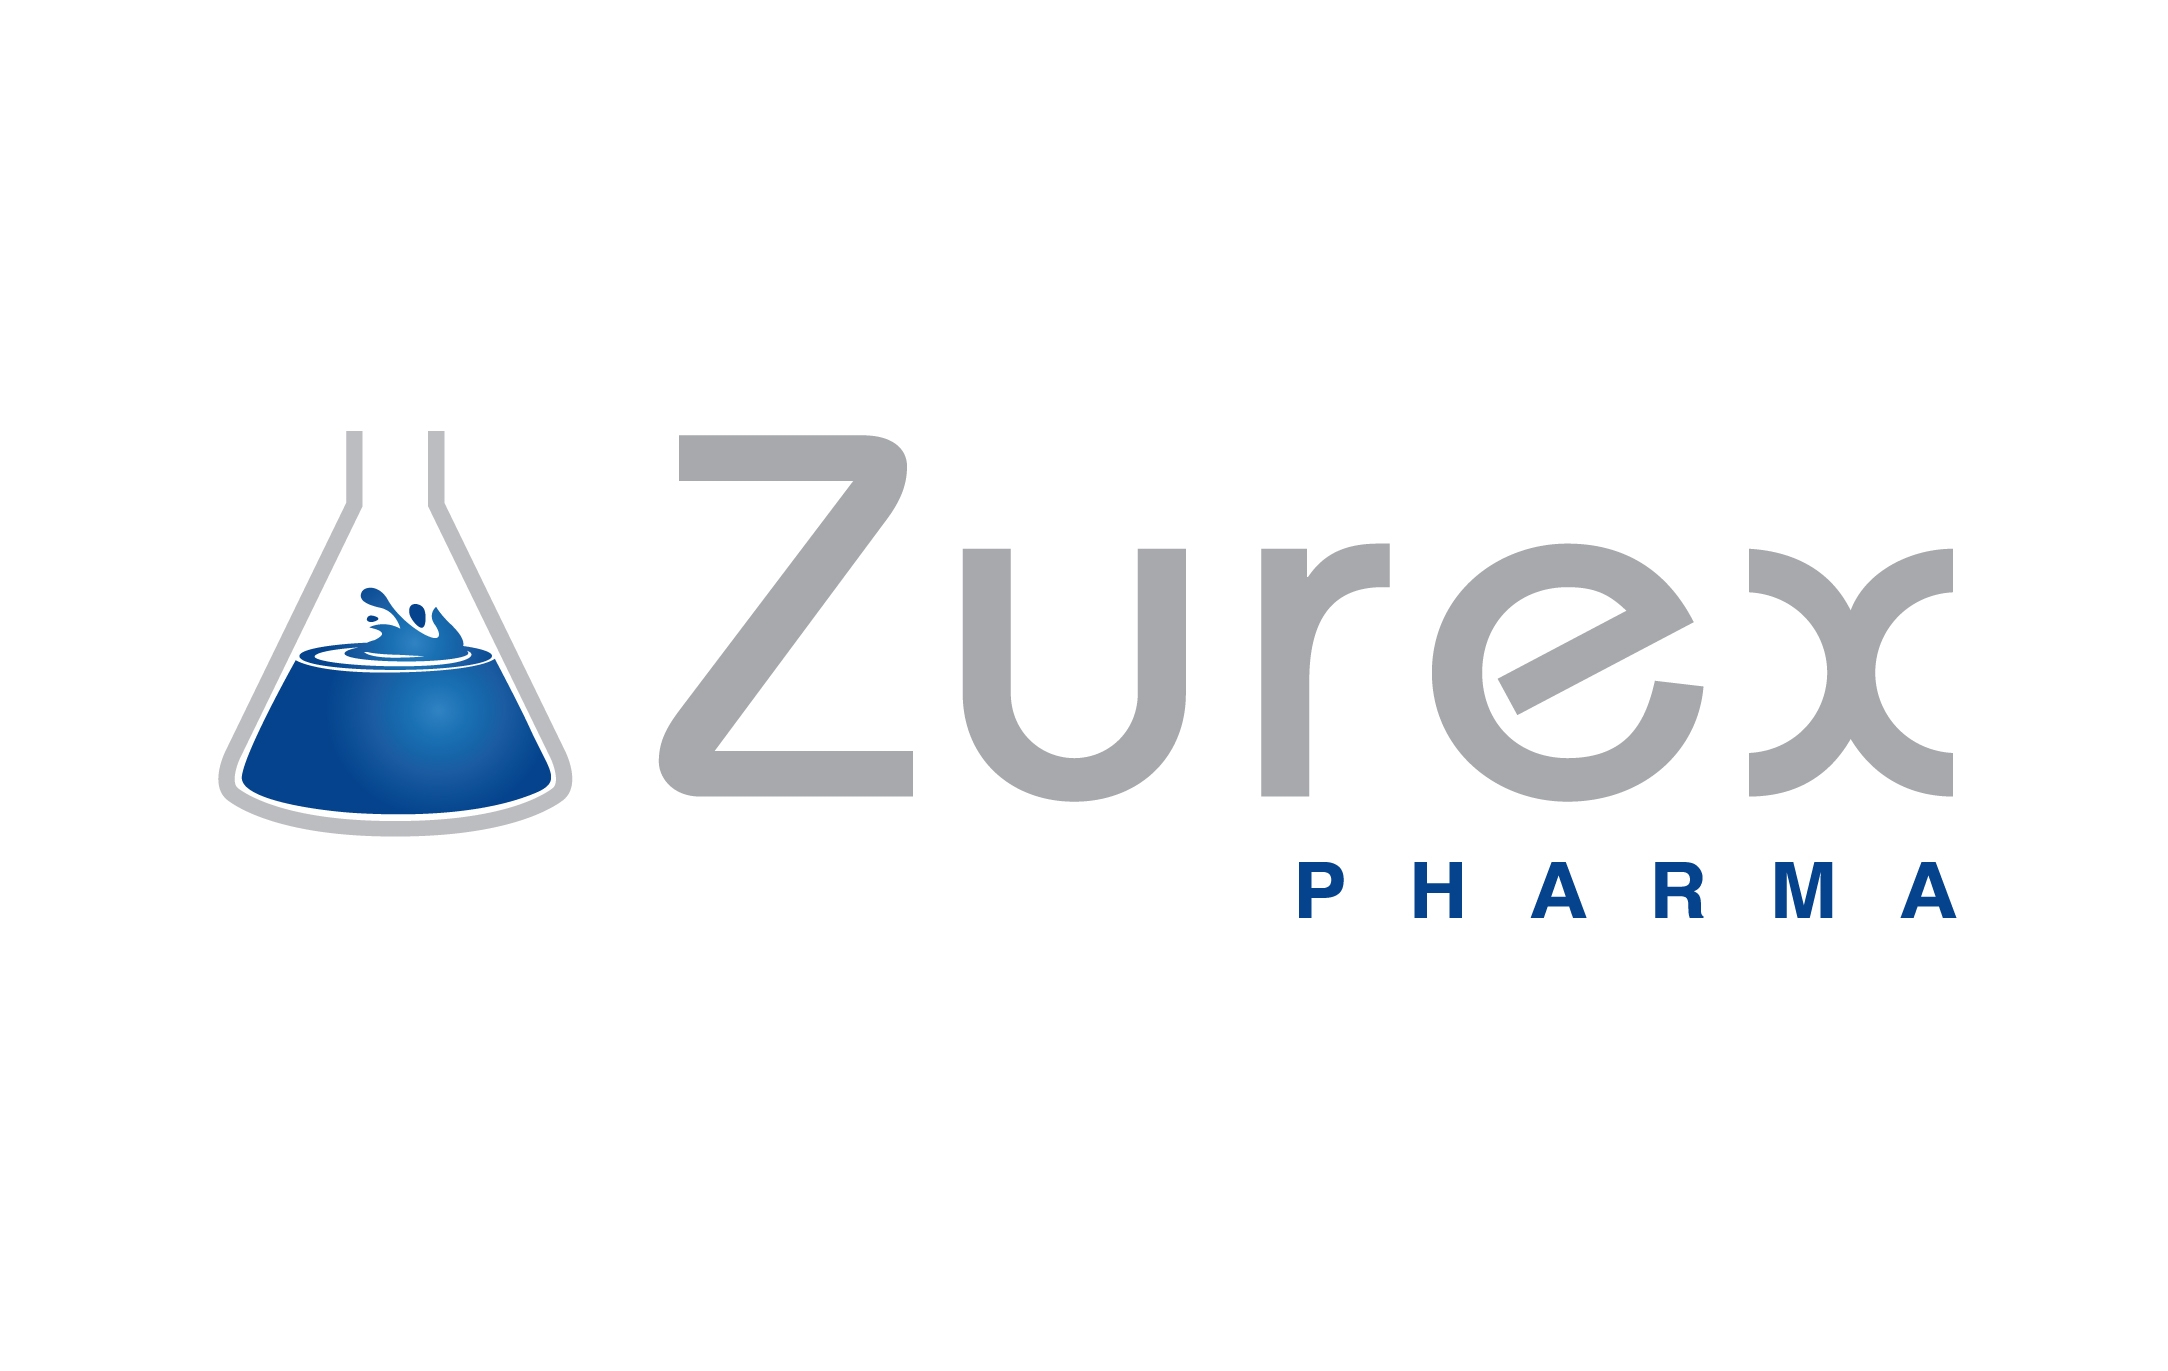 Zurex Pharma Logo